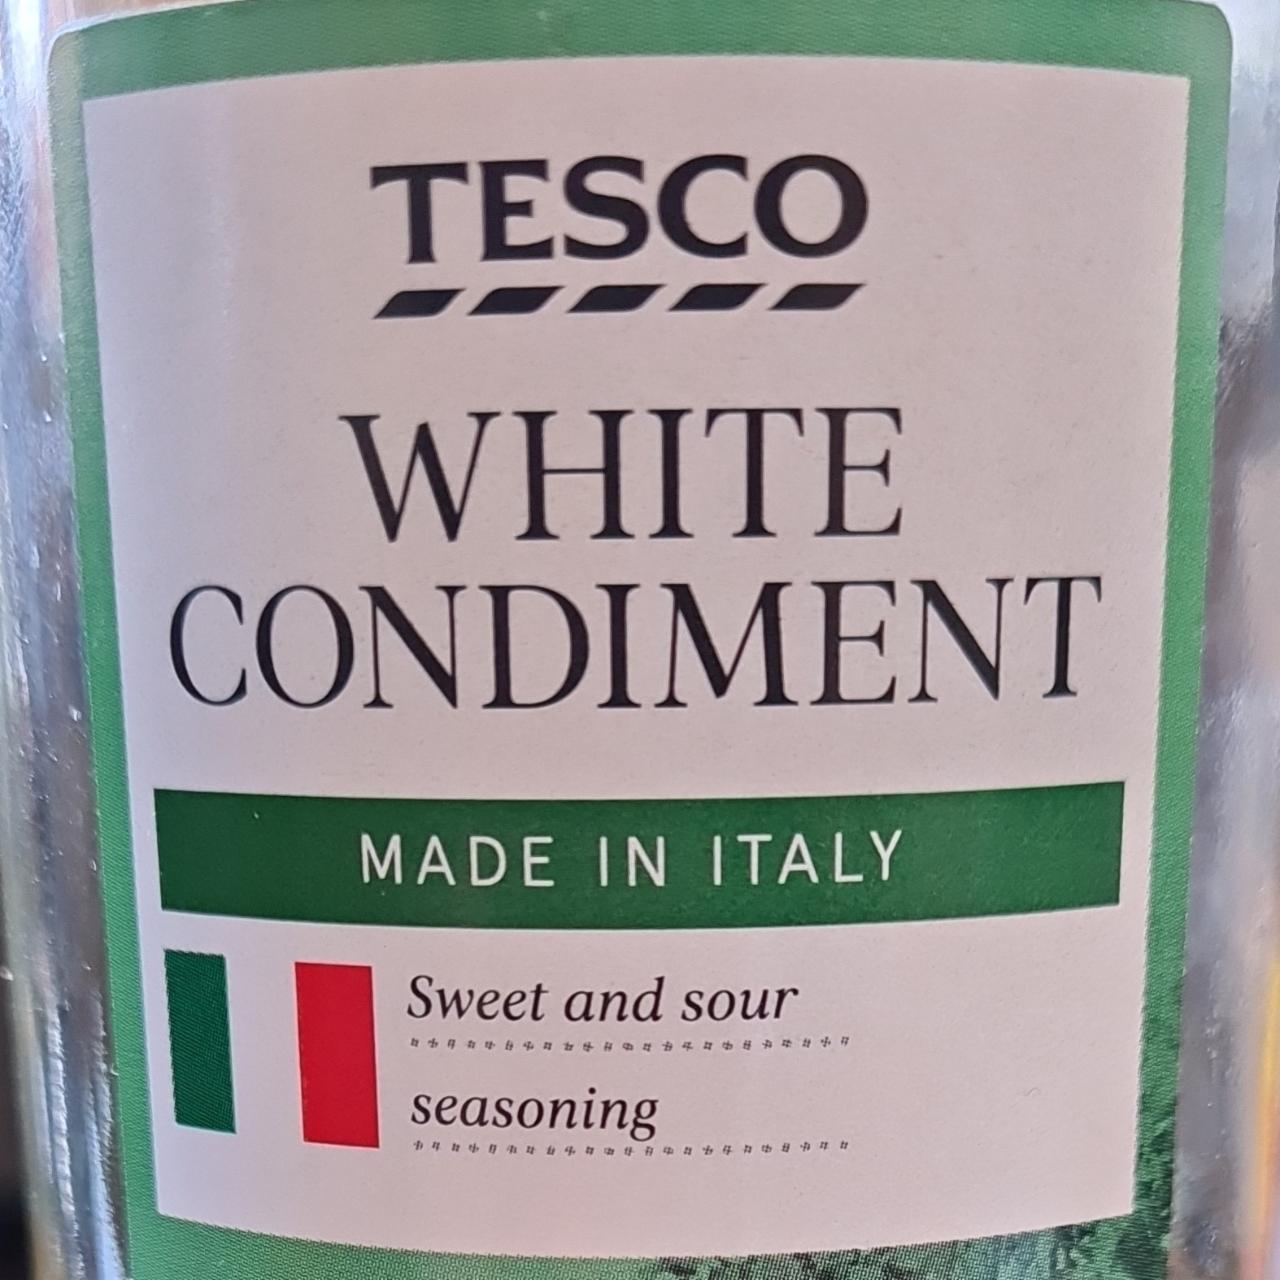 Fotografie - White condiment Tesco